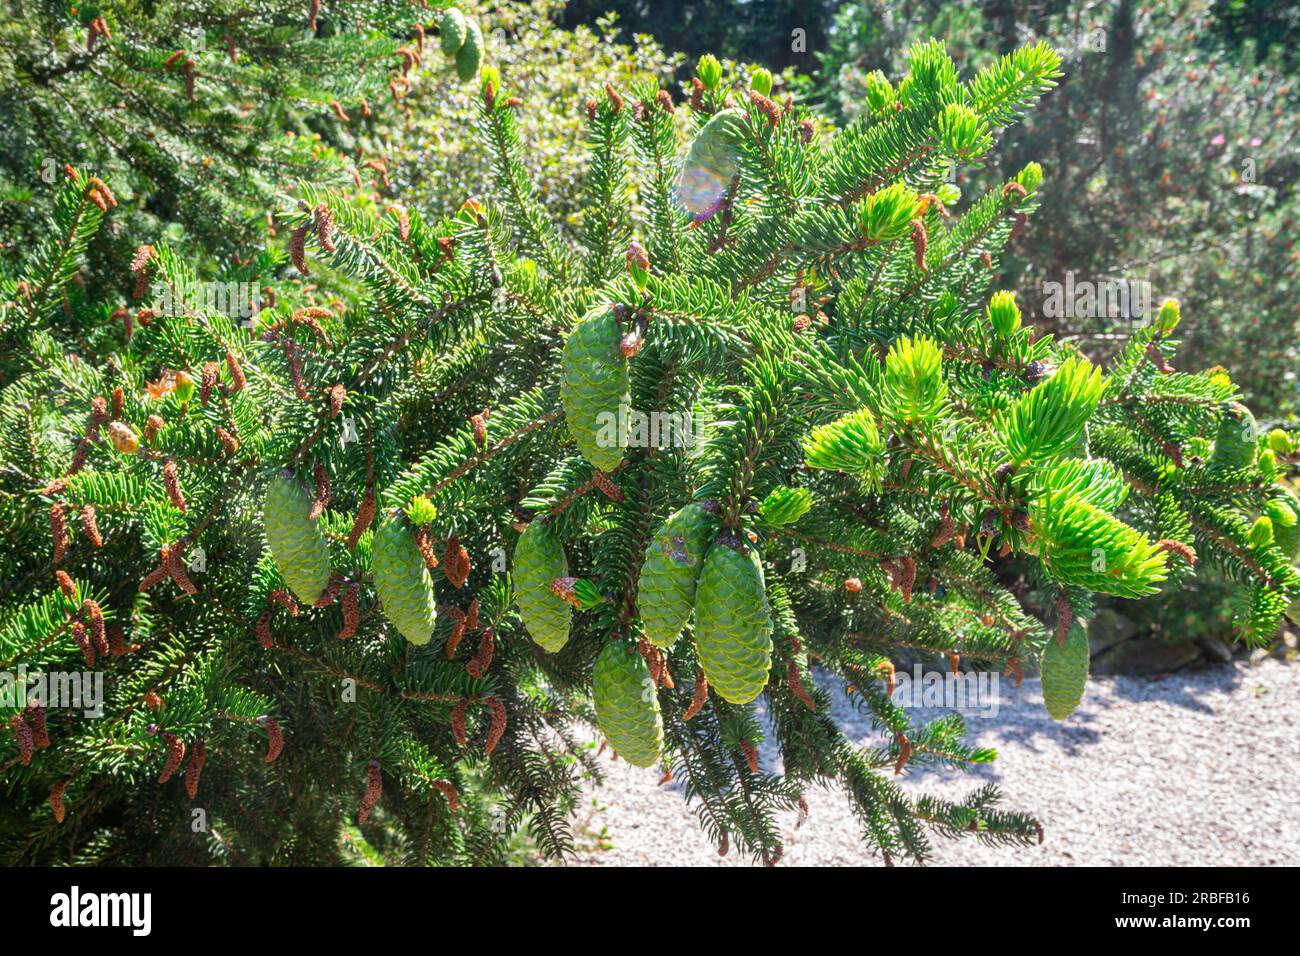 Green hanging cones of a tigertail spruce (Picea polita or Picea torano) in botanical garden 'Pinetum Blijdenstein' in Hilversum, The Netherlands. Stock Photo